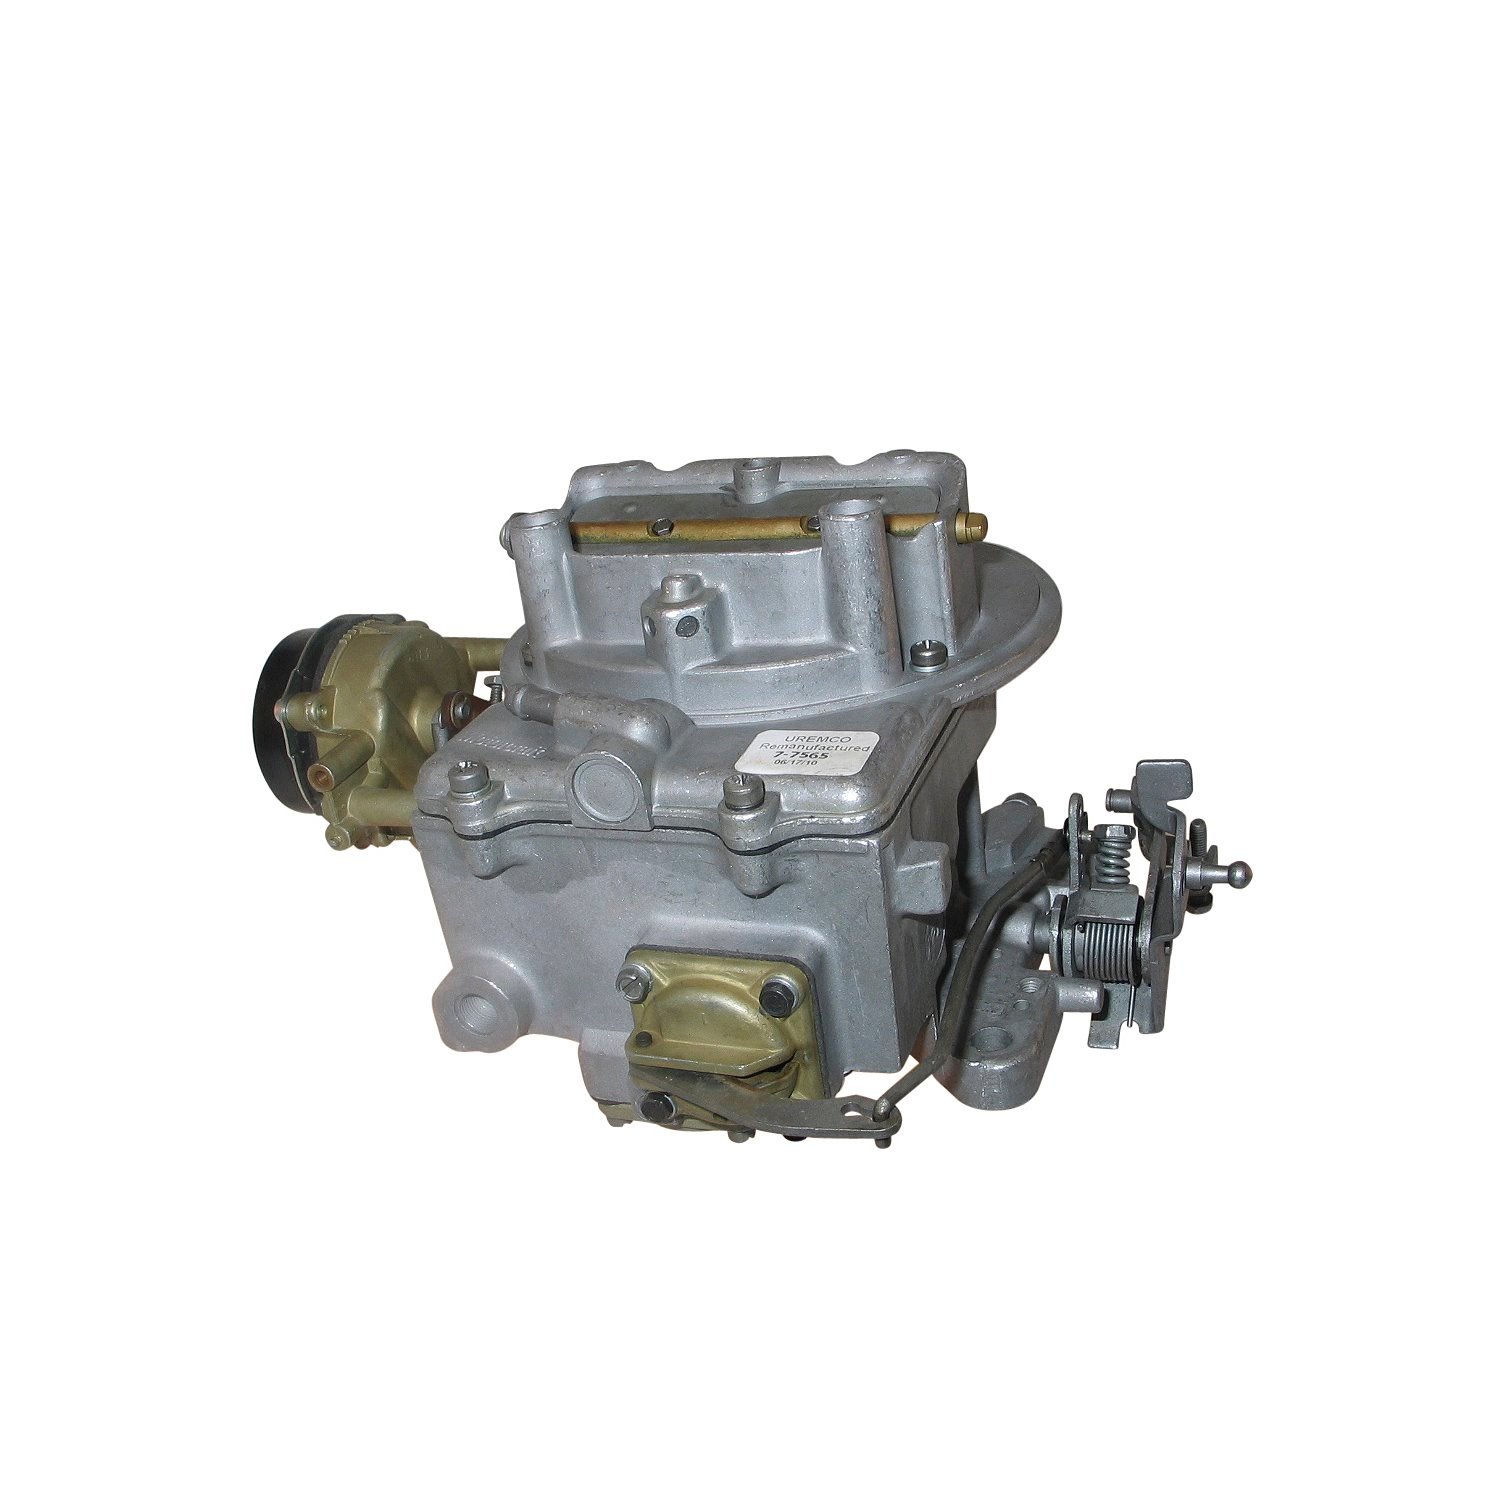 7-7565 Motorcraft Remanufactured Carburetor, 2150, w/2 EGR Ports-Style